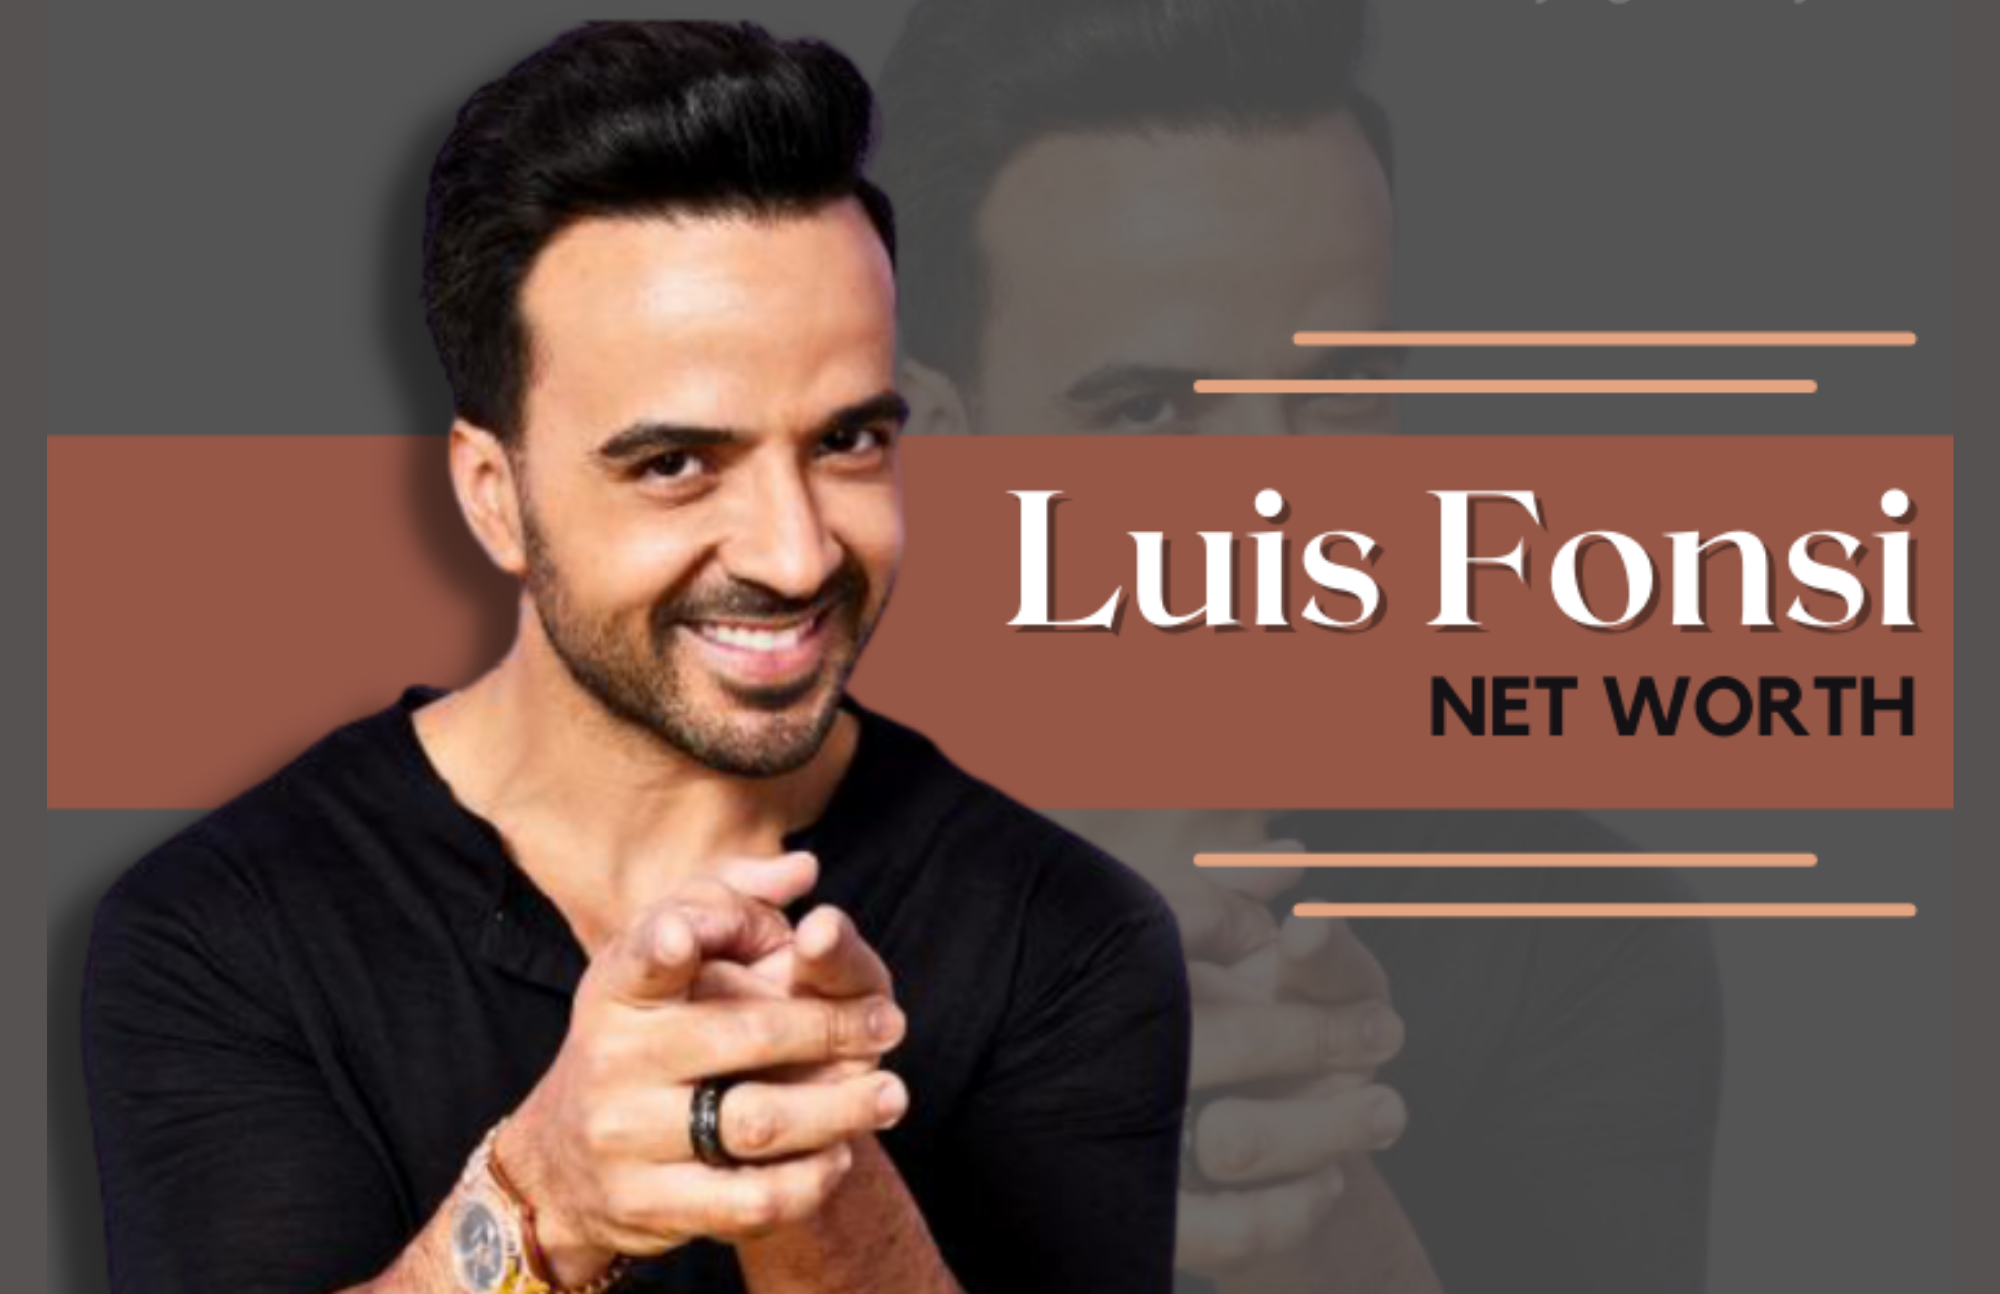 Luis Fonsi Net Worth - A Puerto Rican Singer Who Got Everyone Dancing